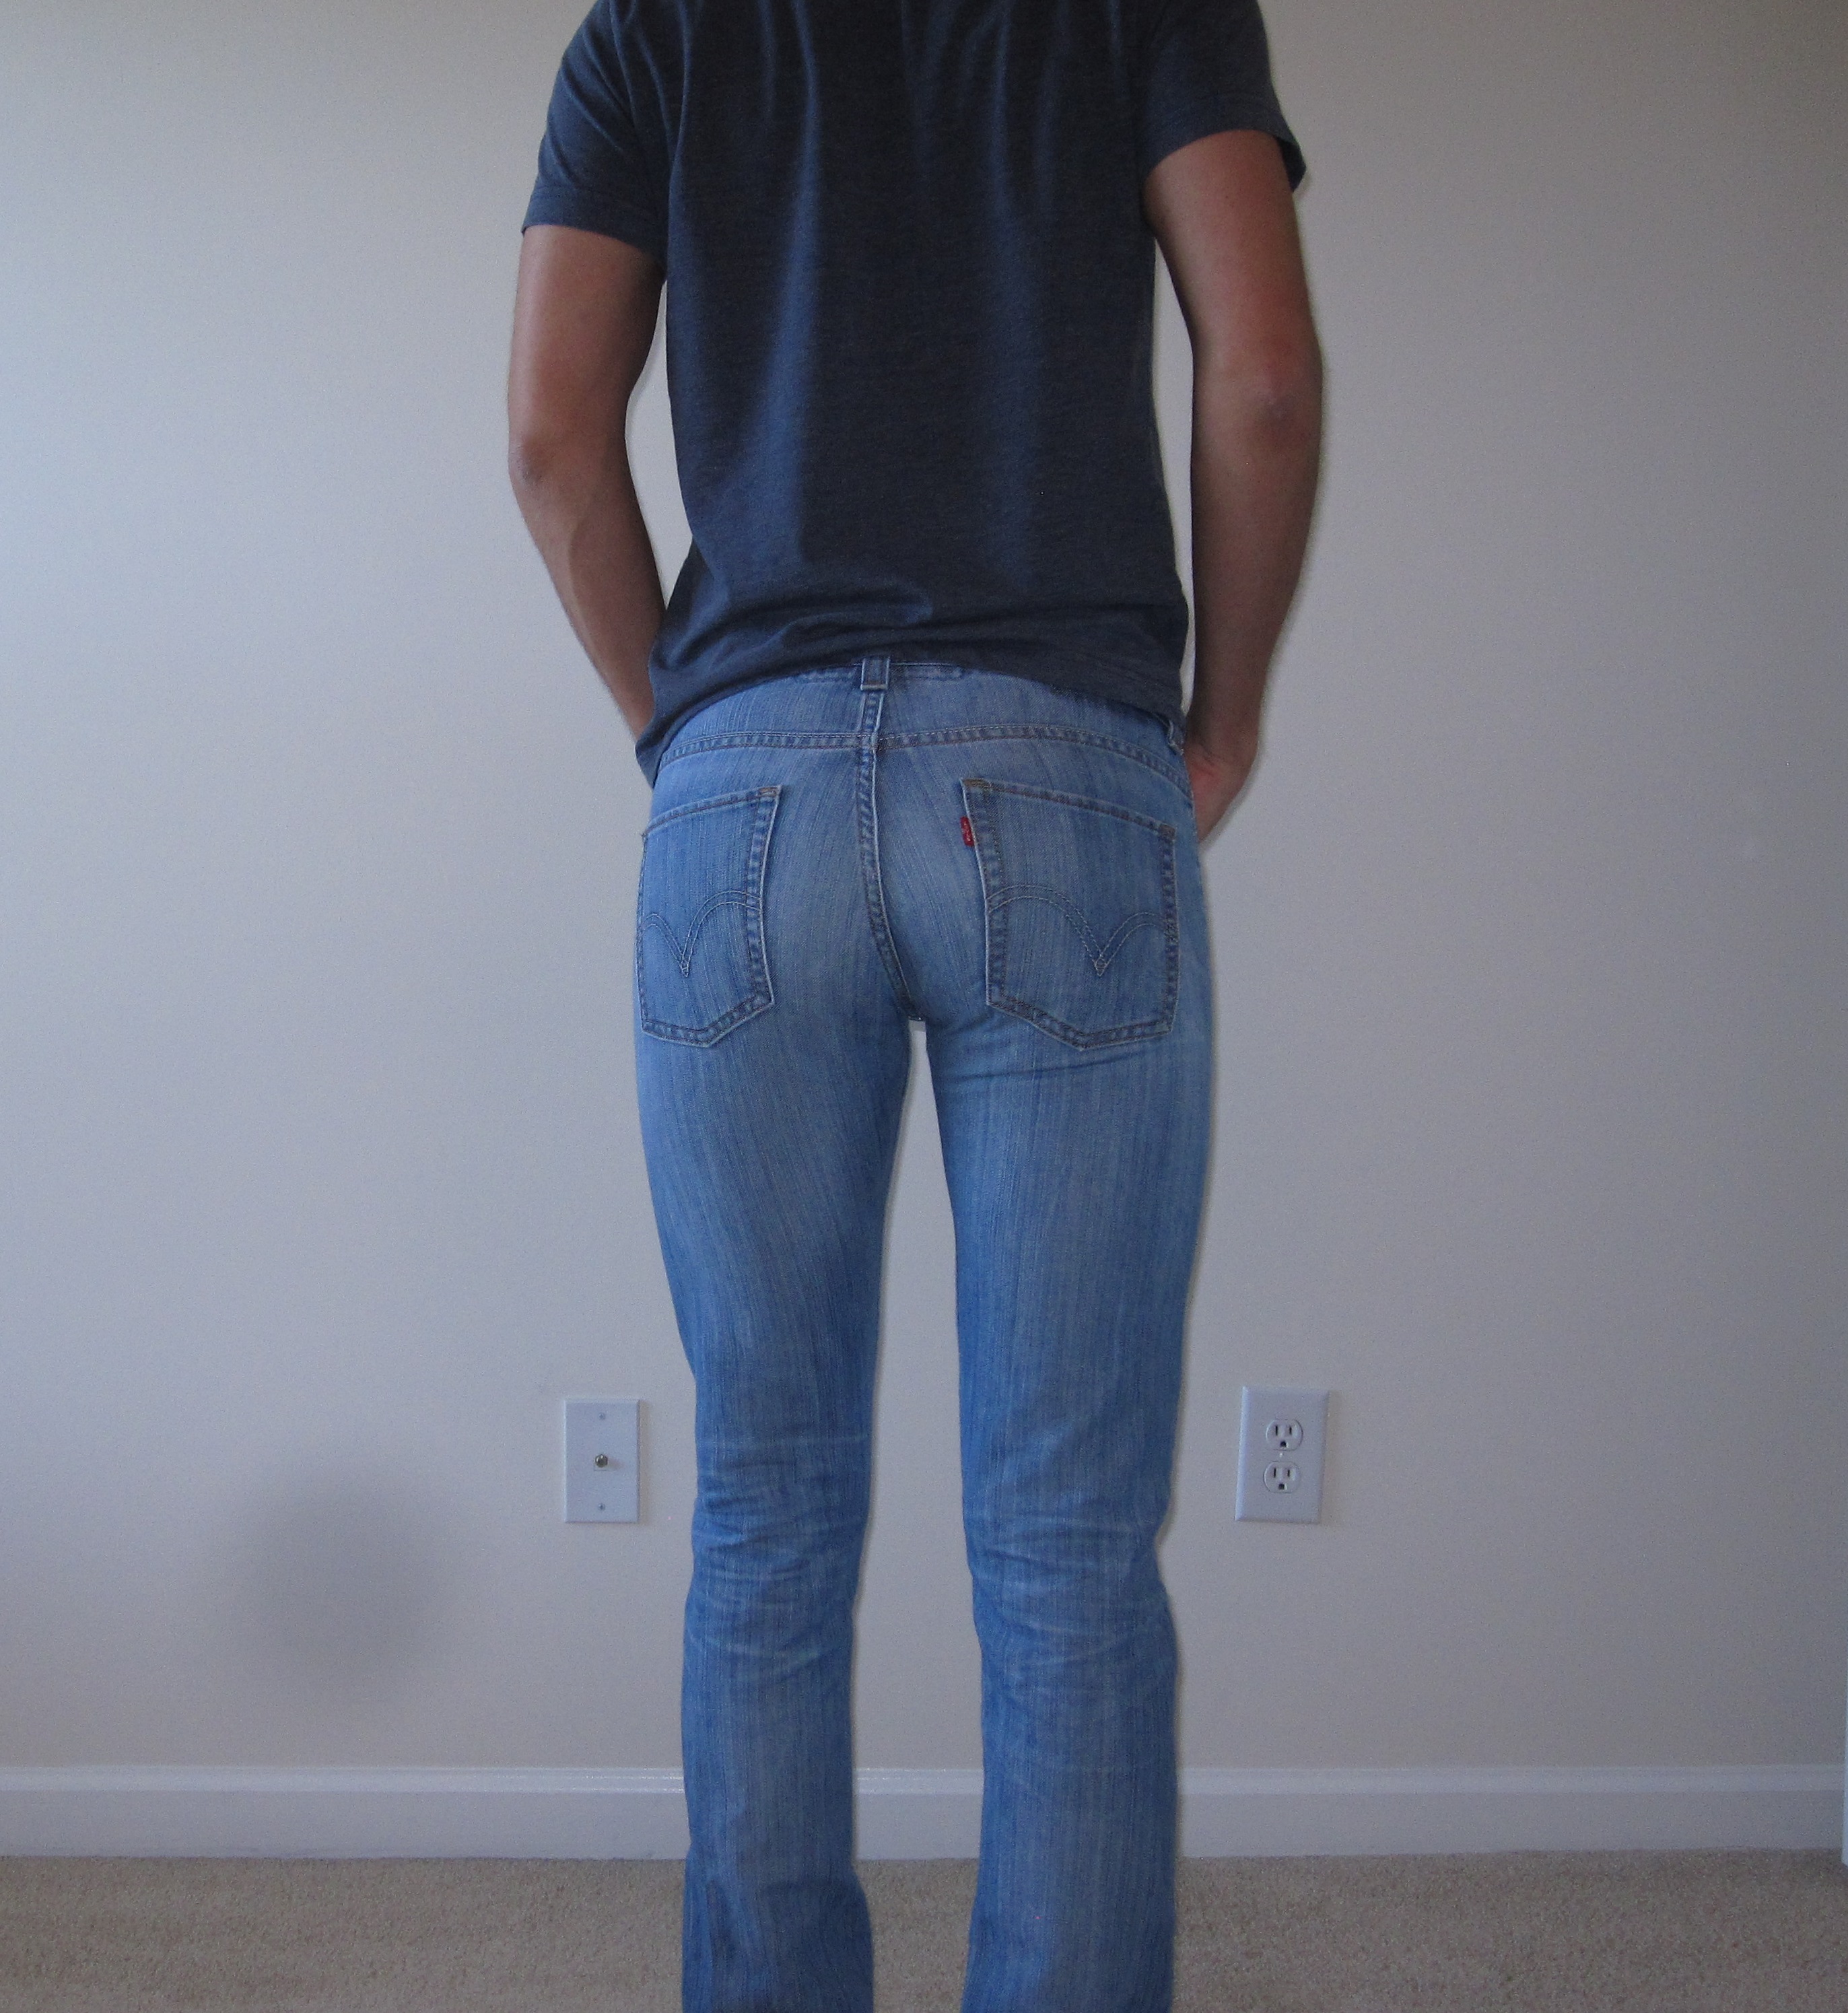 levis 511 skinny jeans